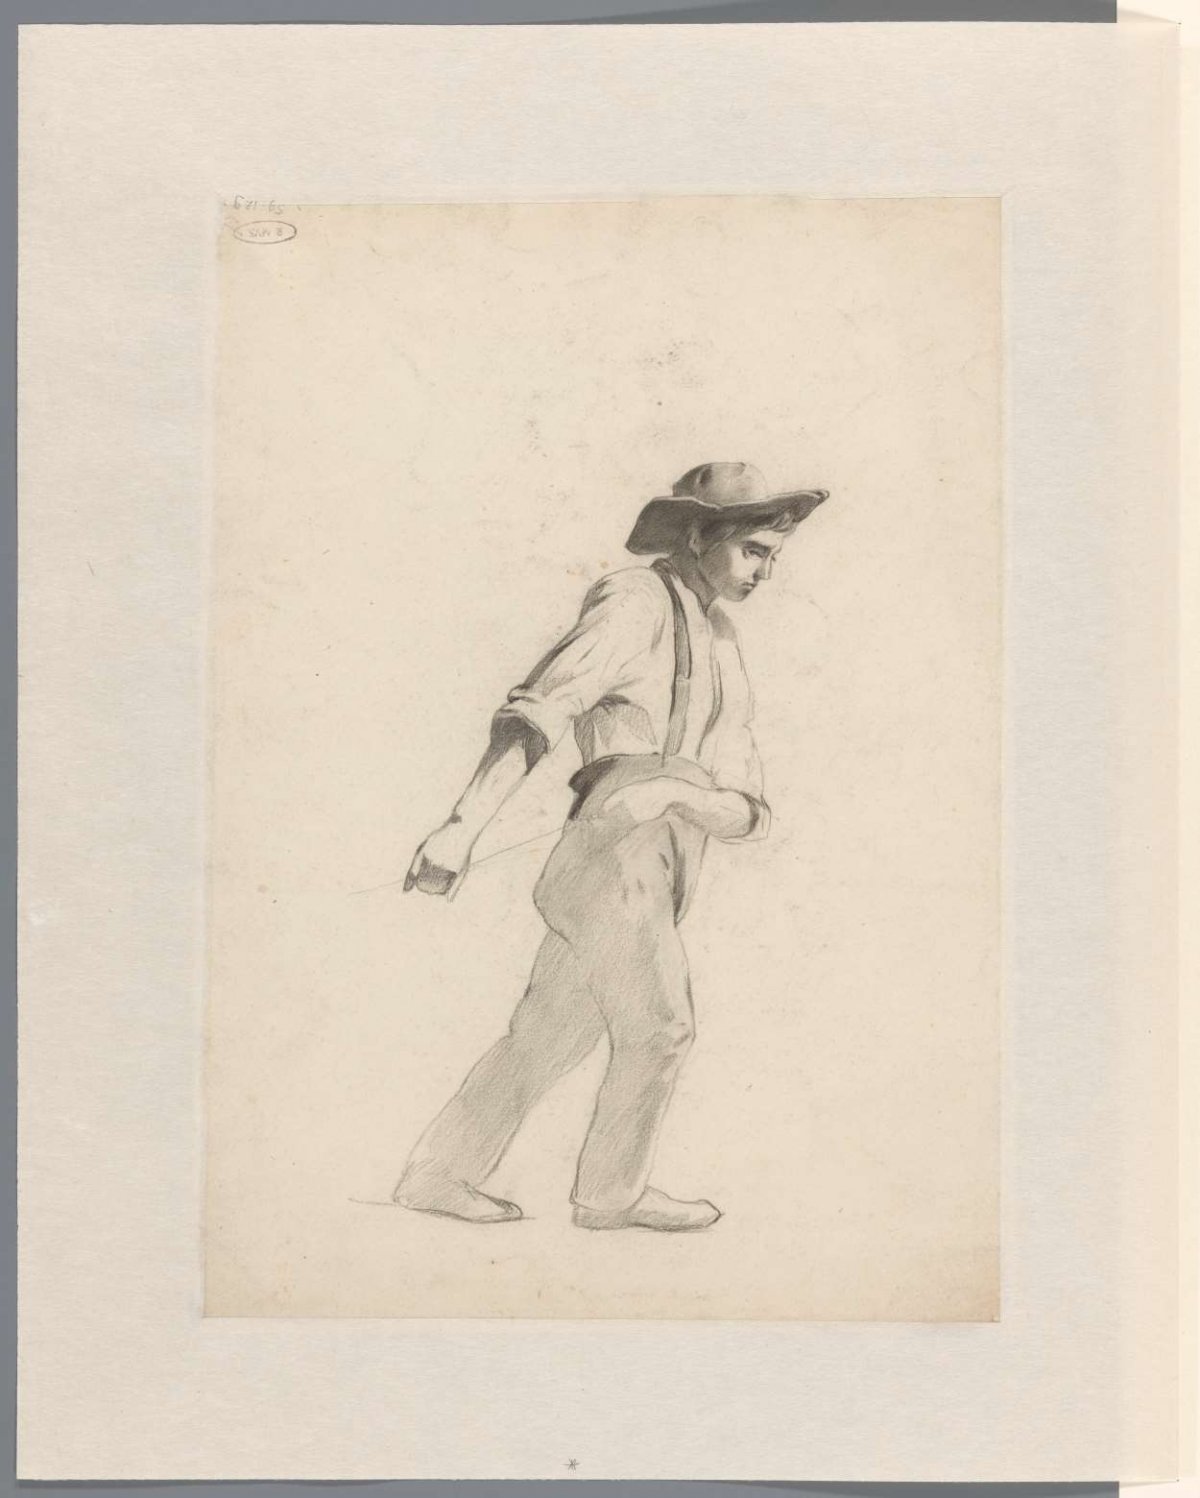 Boy pulling a load, Anton Mauve, 1848 - 1888